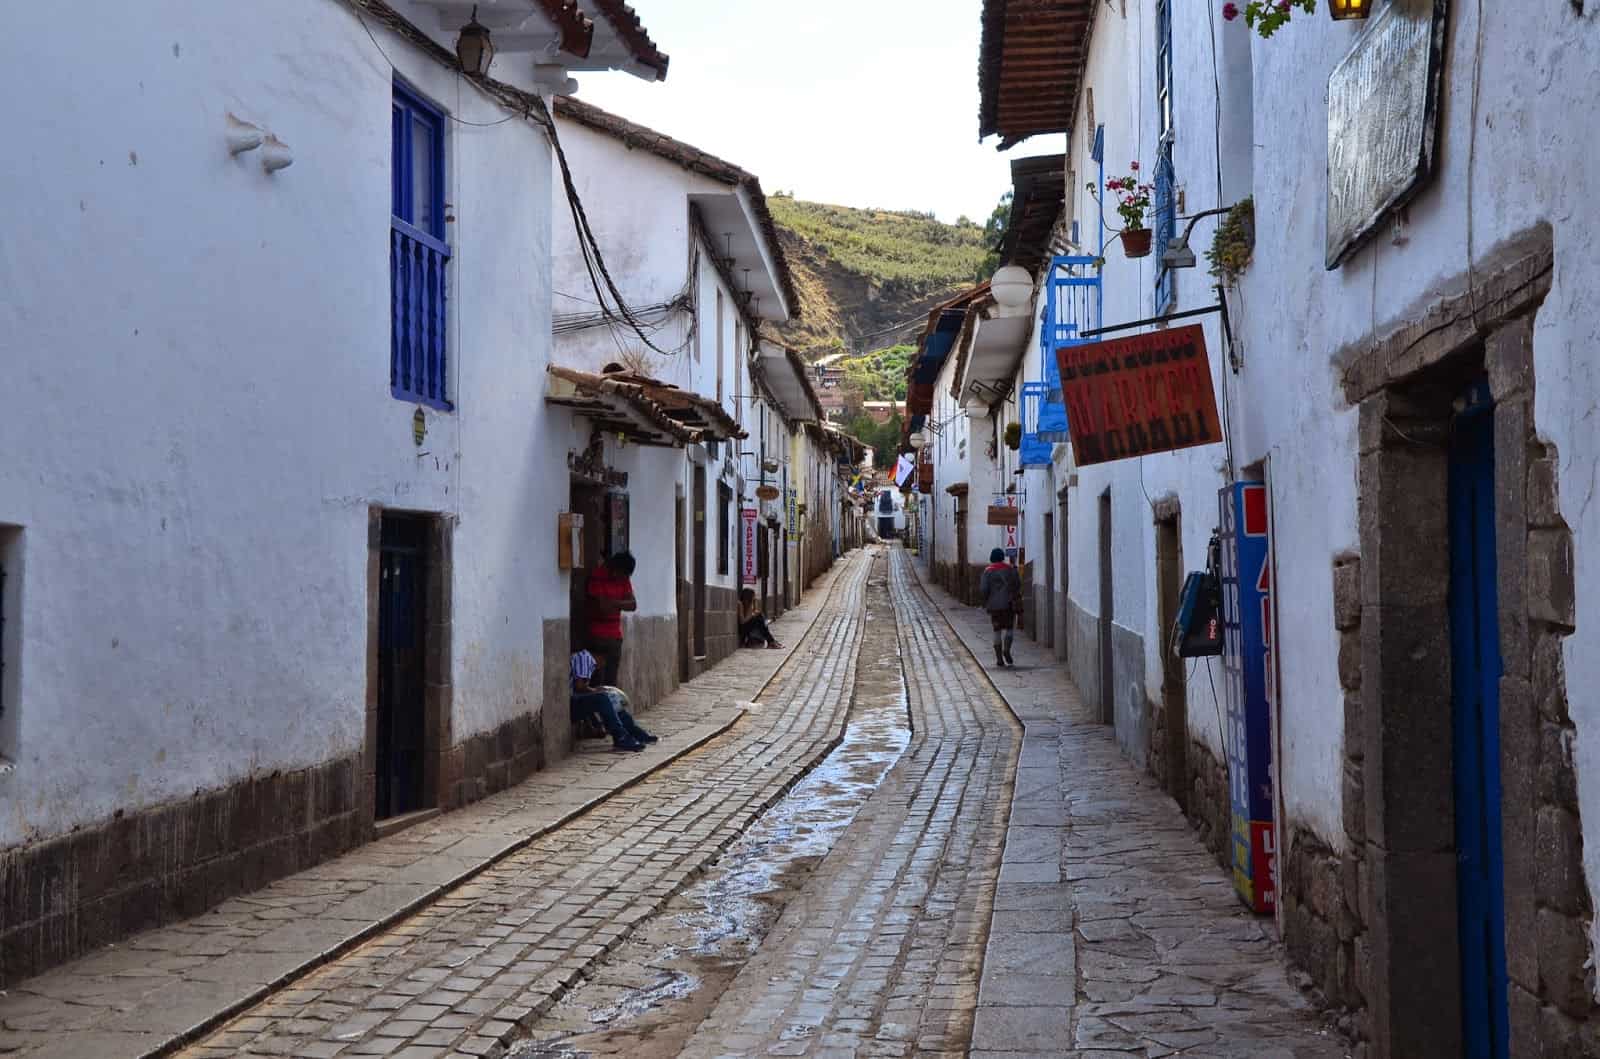 San Blas, Cusco, Peru